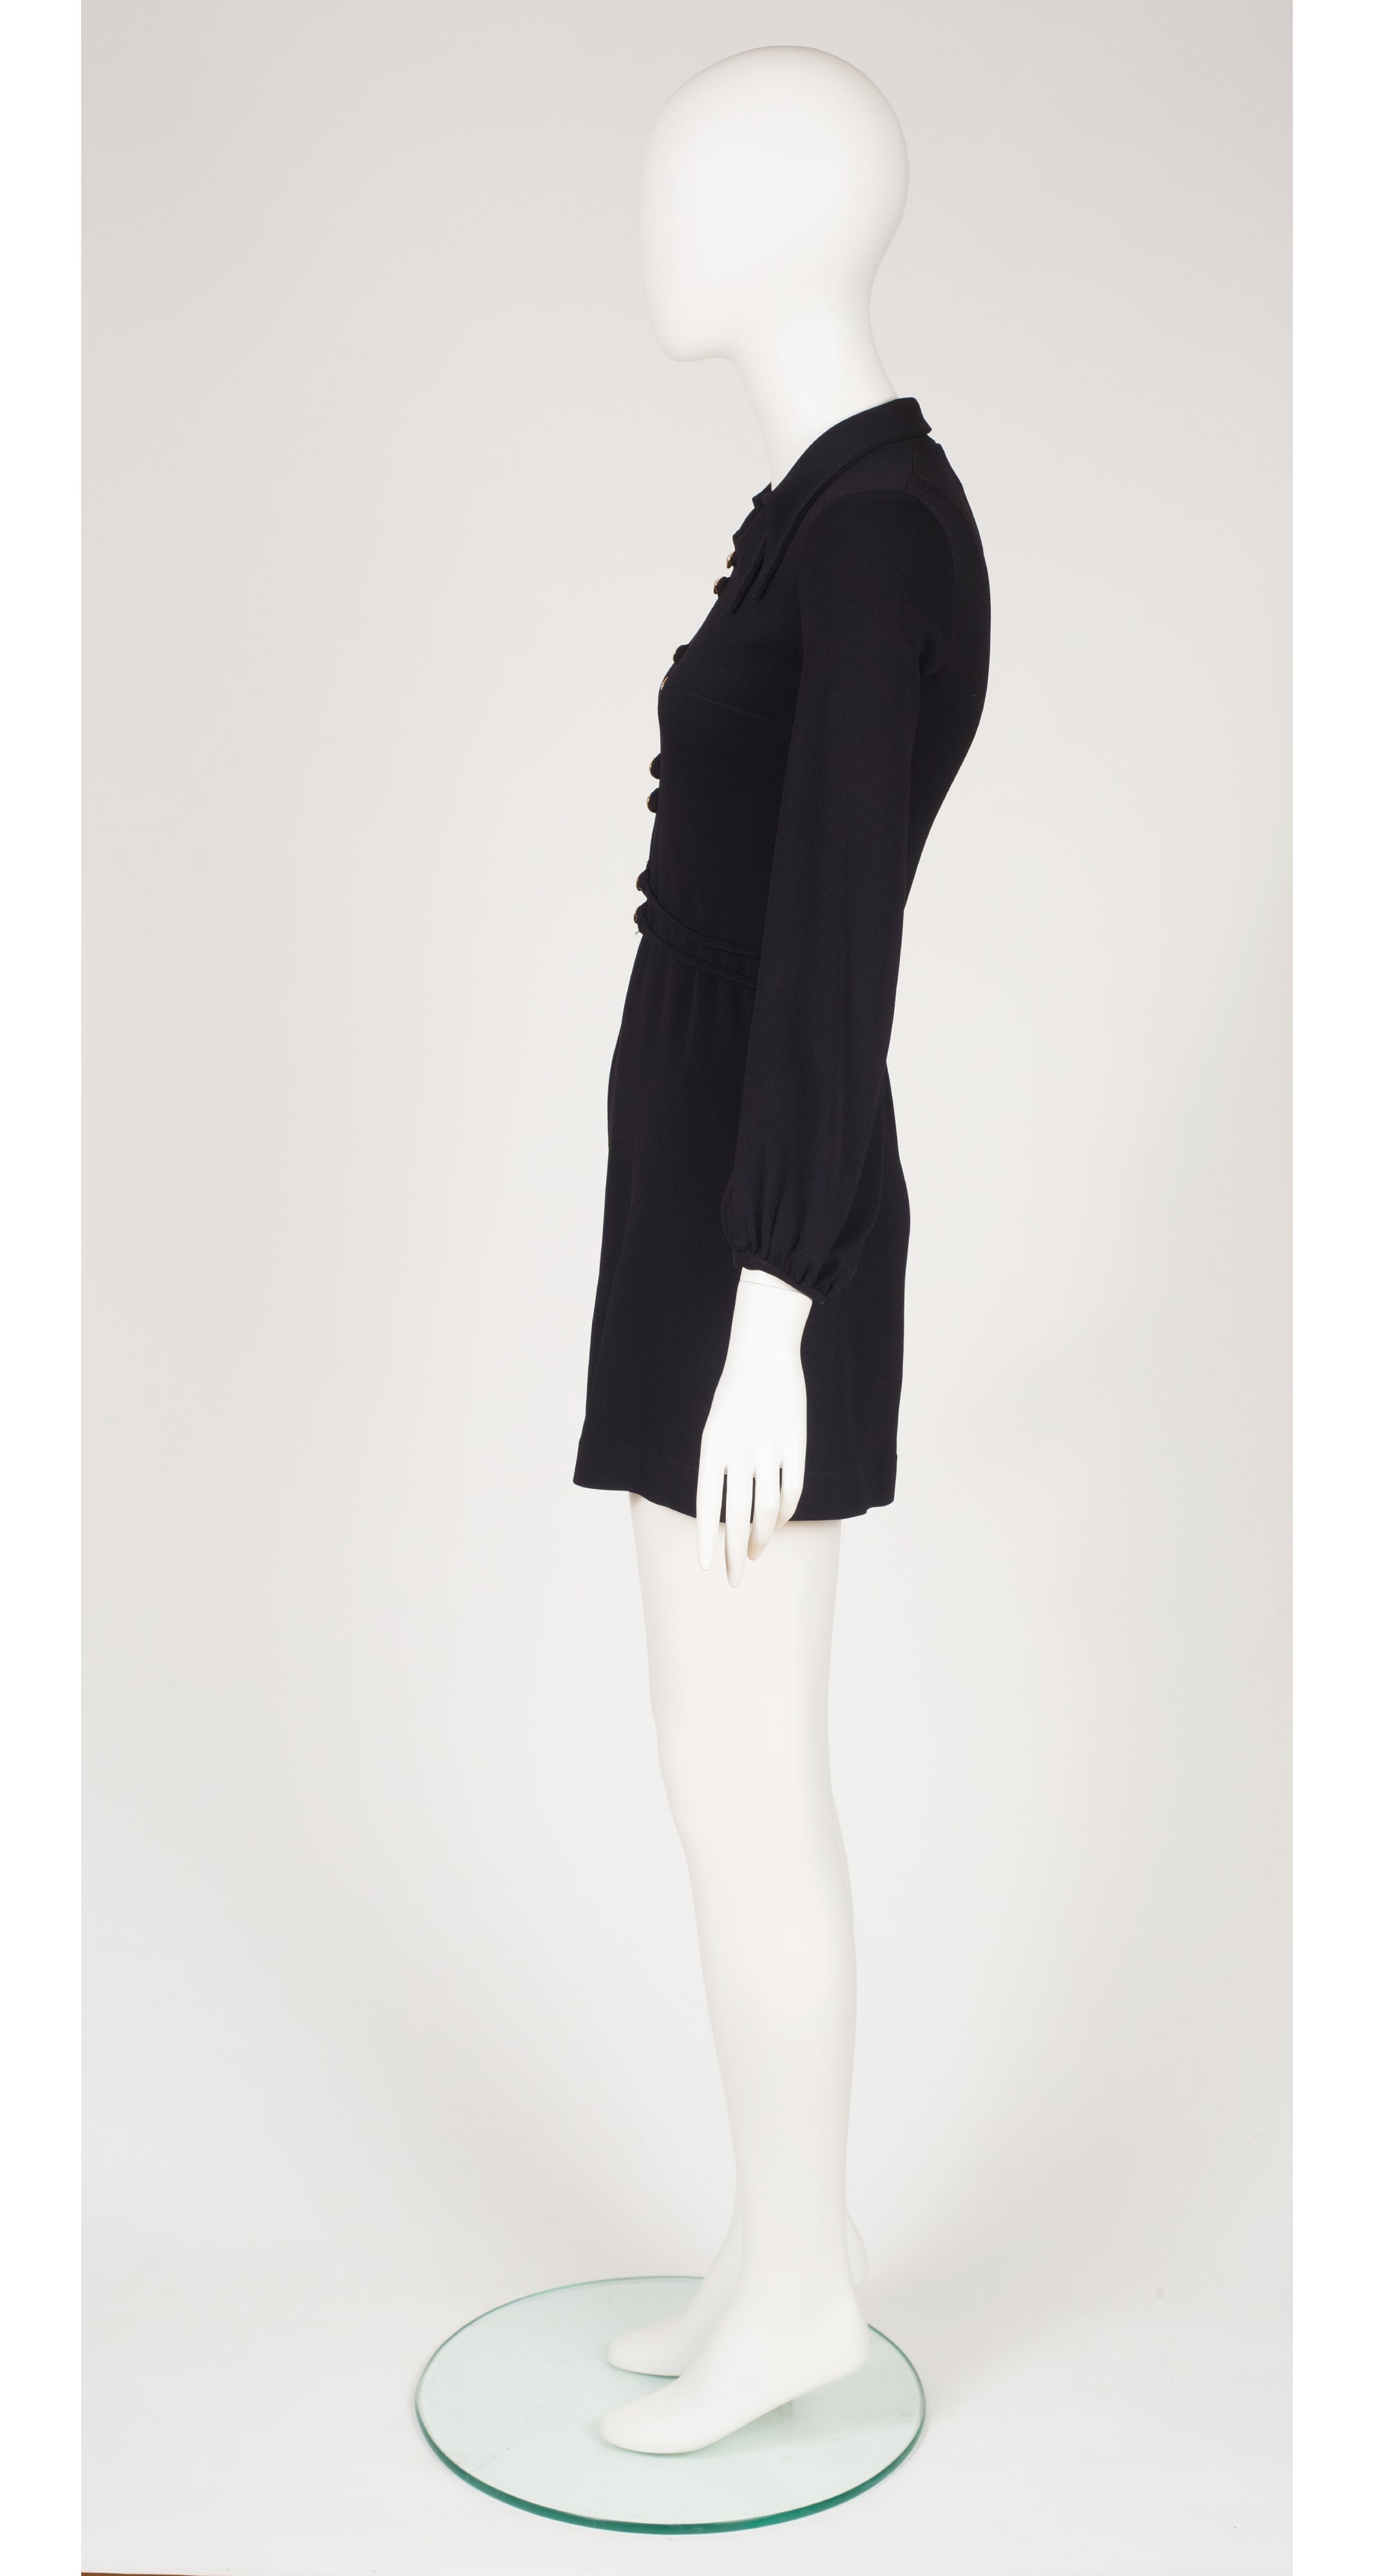 1960s Black Jersey Dagger Collar Mini Dress